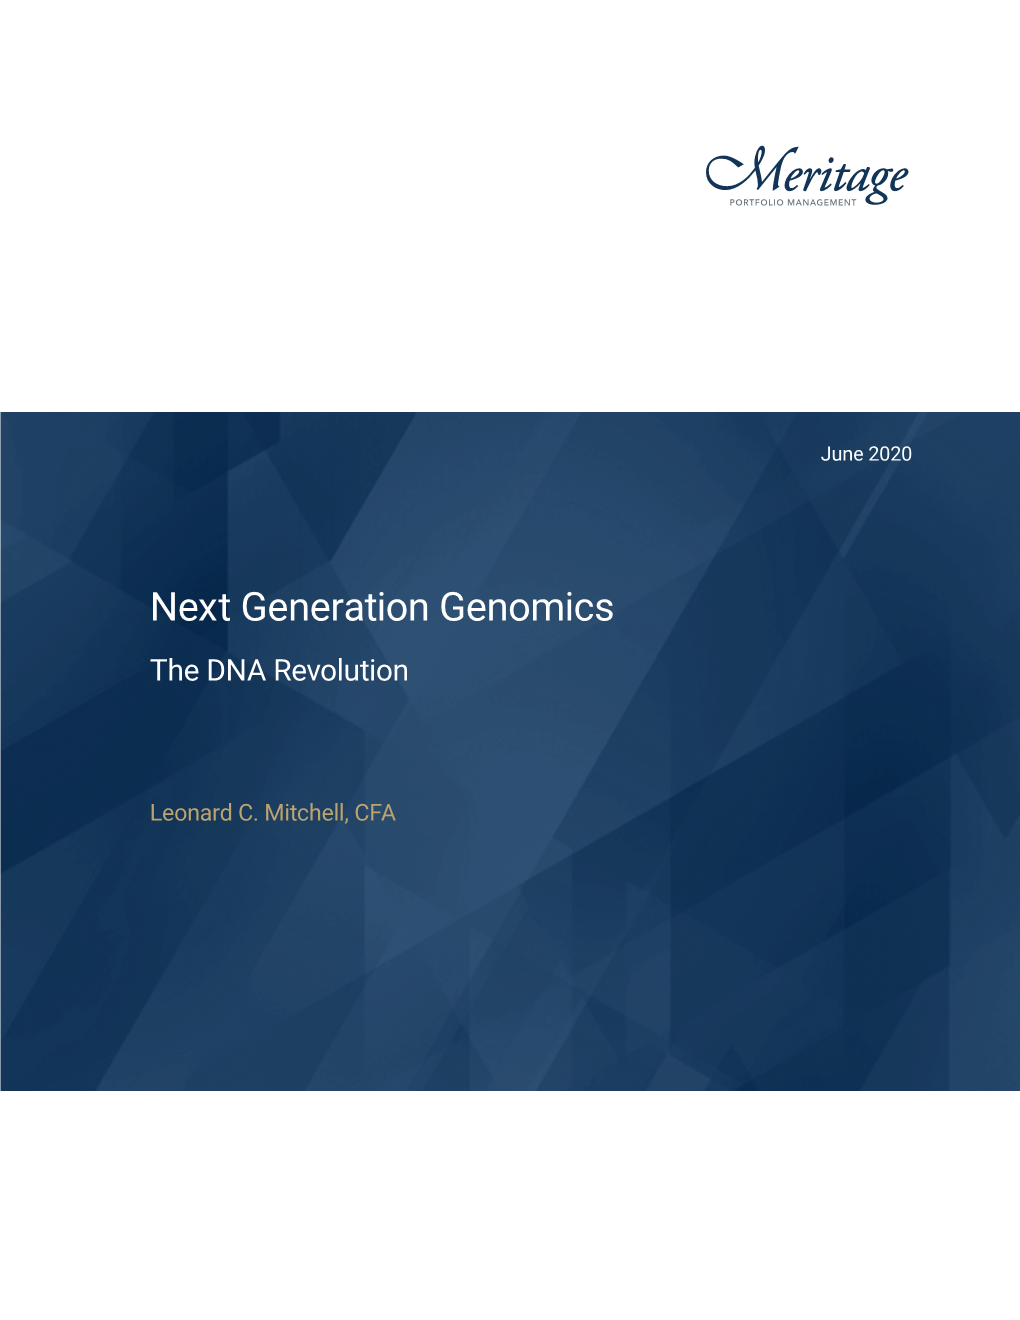 Next Generation Genomics the DNA Revolution